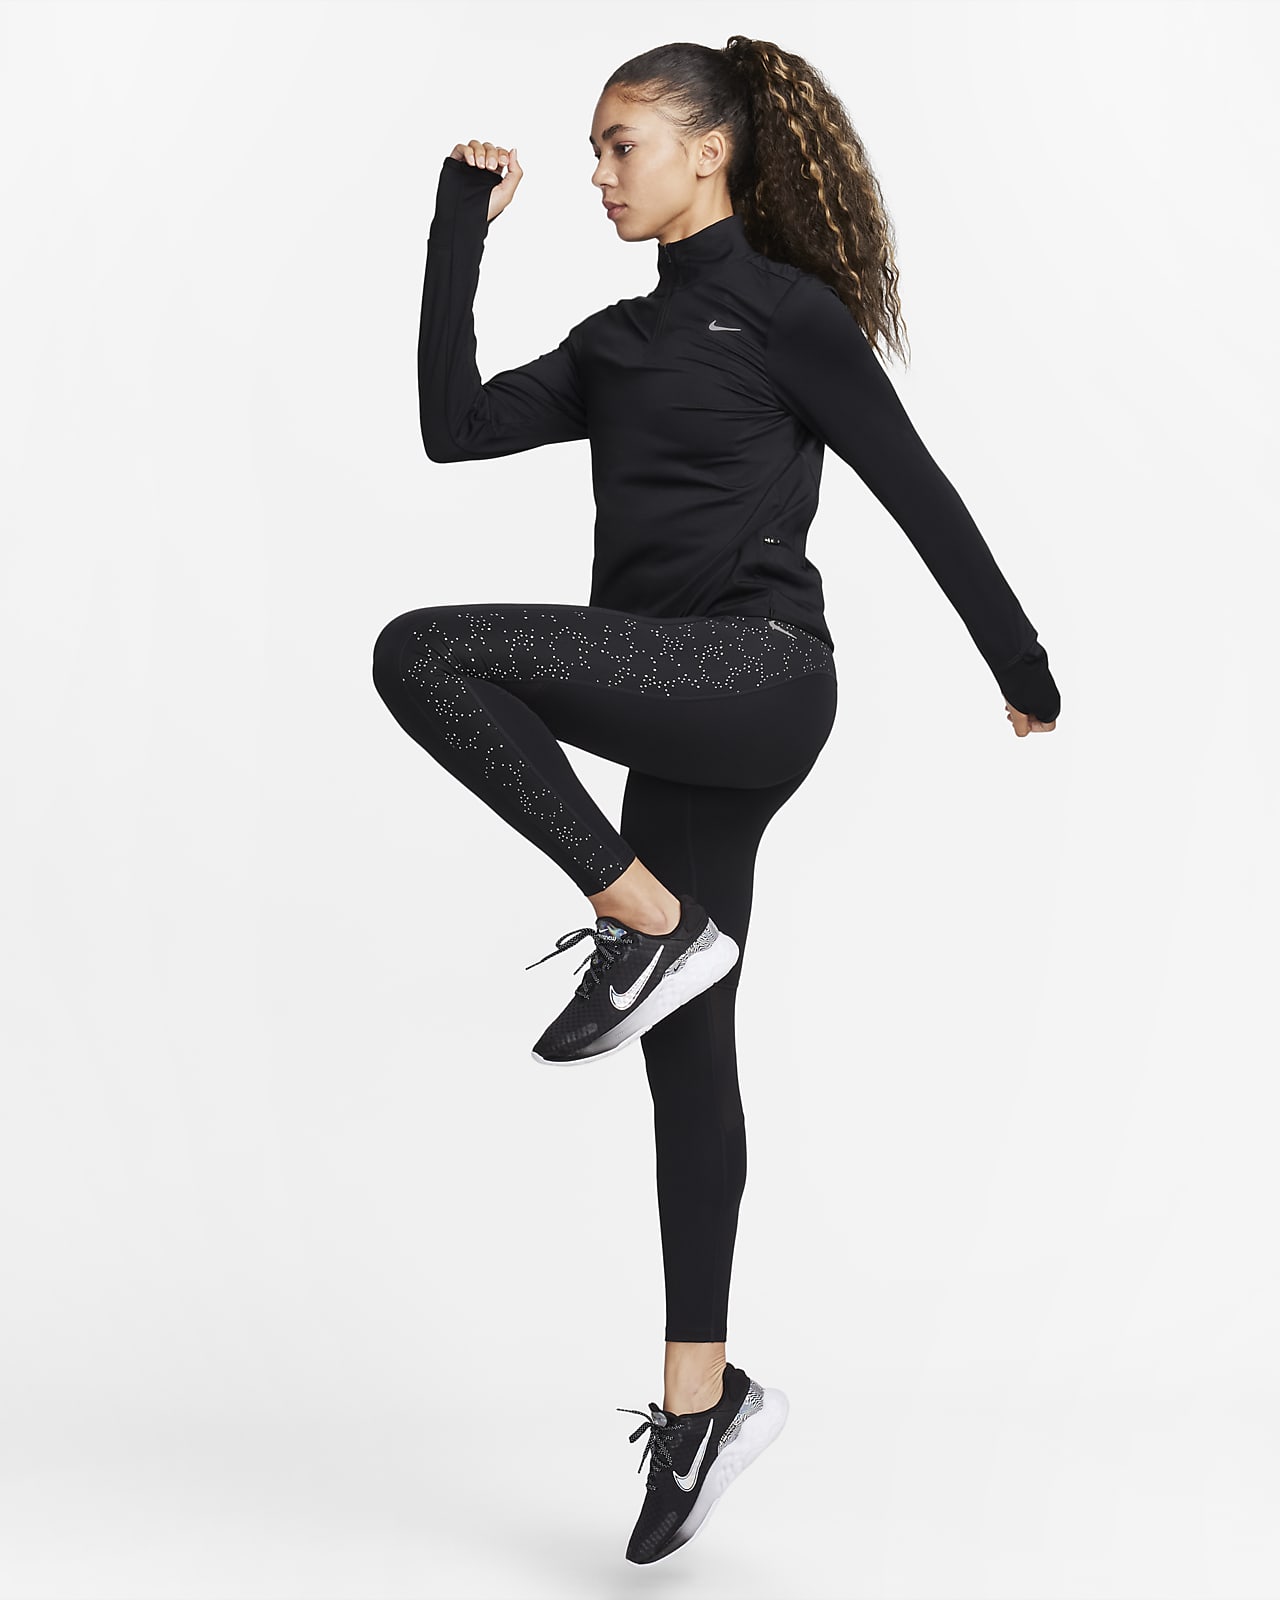 Nike Power Speed Womens Dri-FIT Running Capris Size XS, Leggings